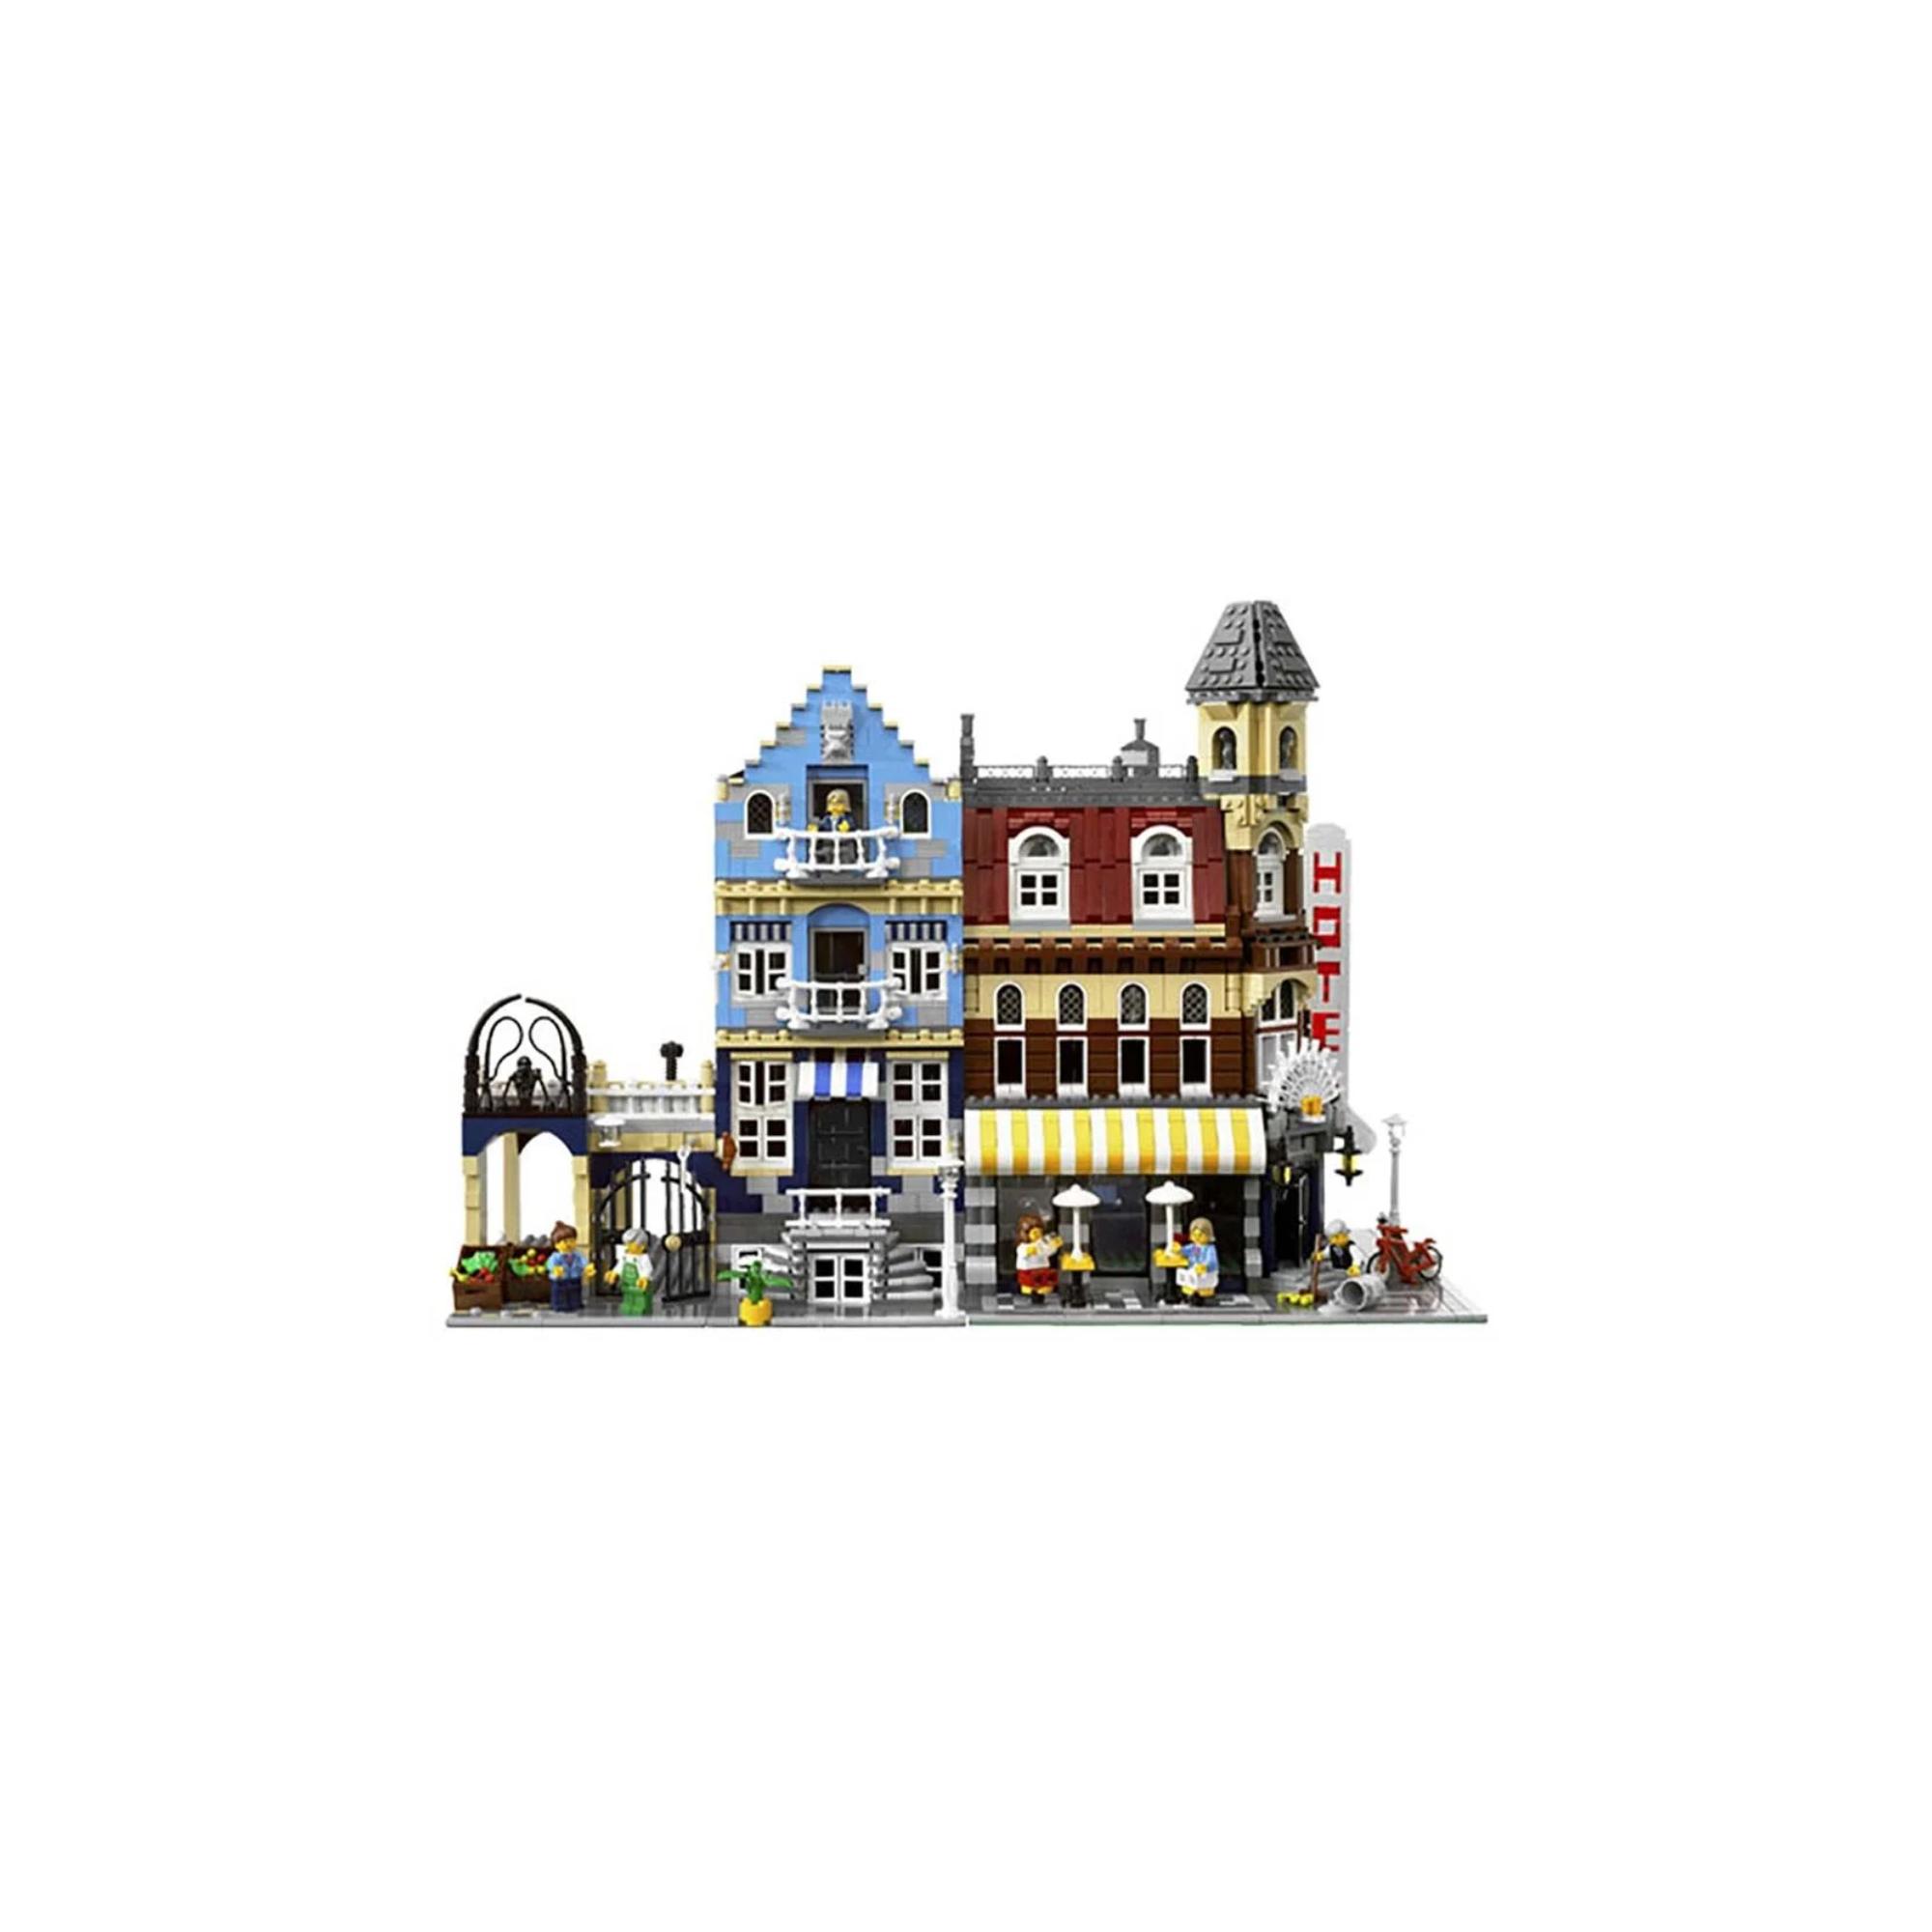 LEGO Factory Market Street Modular Buildings